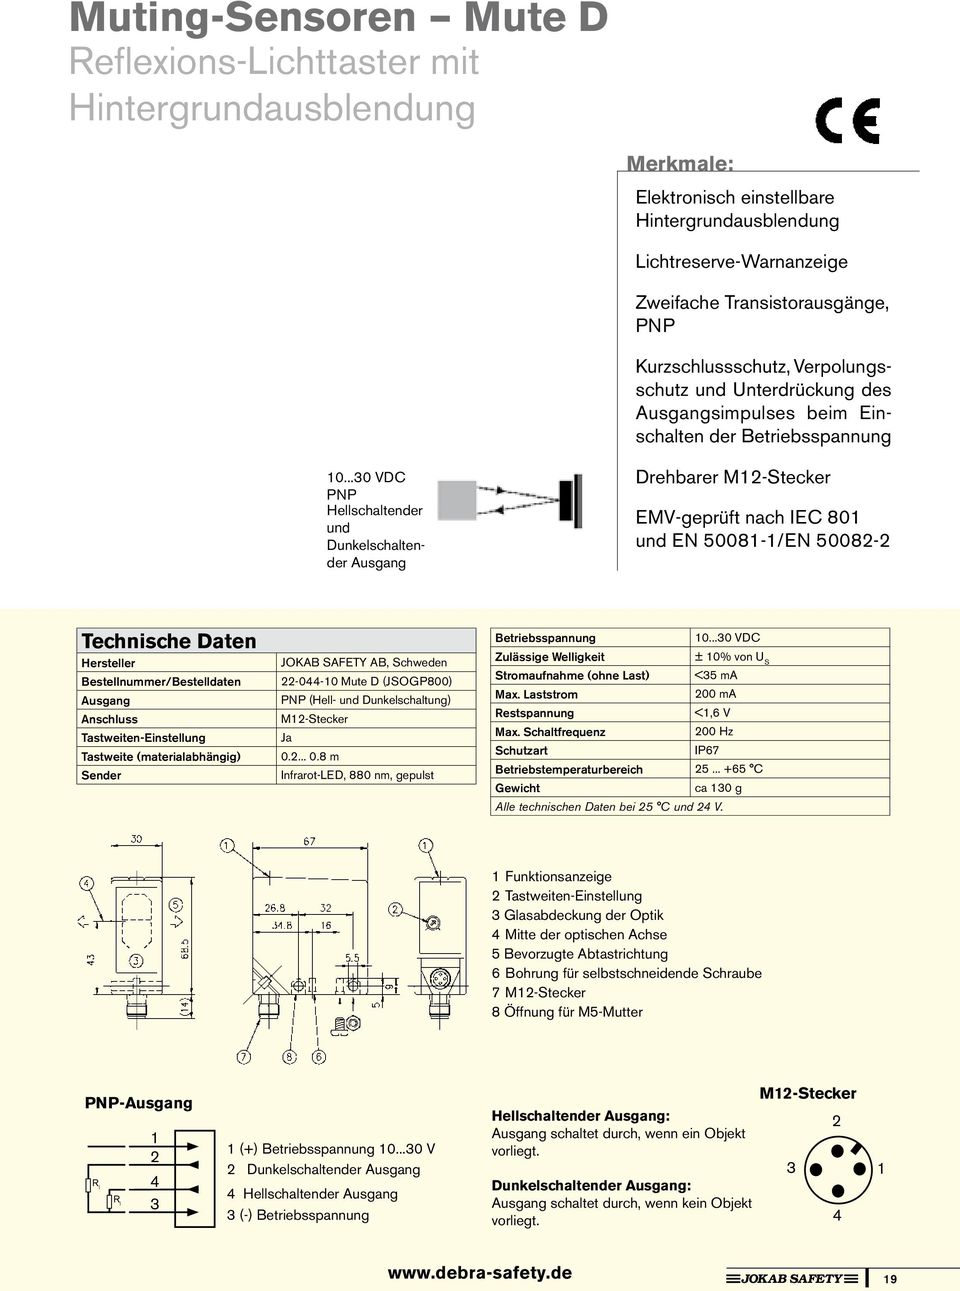 ..30 VDC PNP Hellschaltender und Dunkelschaltender Ausgang Drehbarer M12-Stecker EMV-geprüft nach IEC 801 und EN 50081-1/EN 50082-2 Technische Daten Hersteller Bestellnummer/Bestelldaten Ausgang